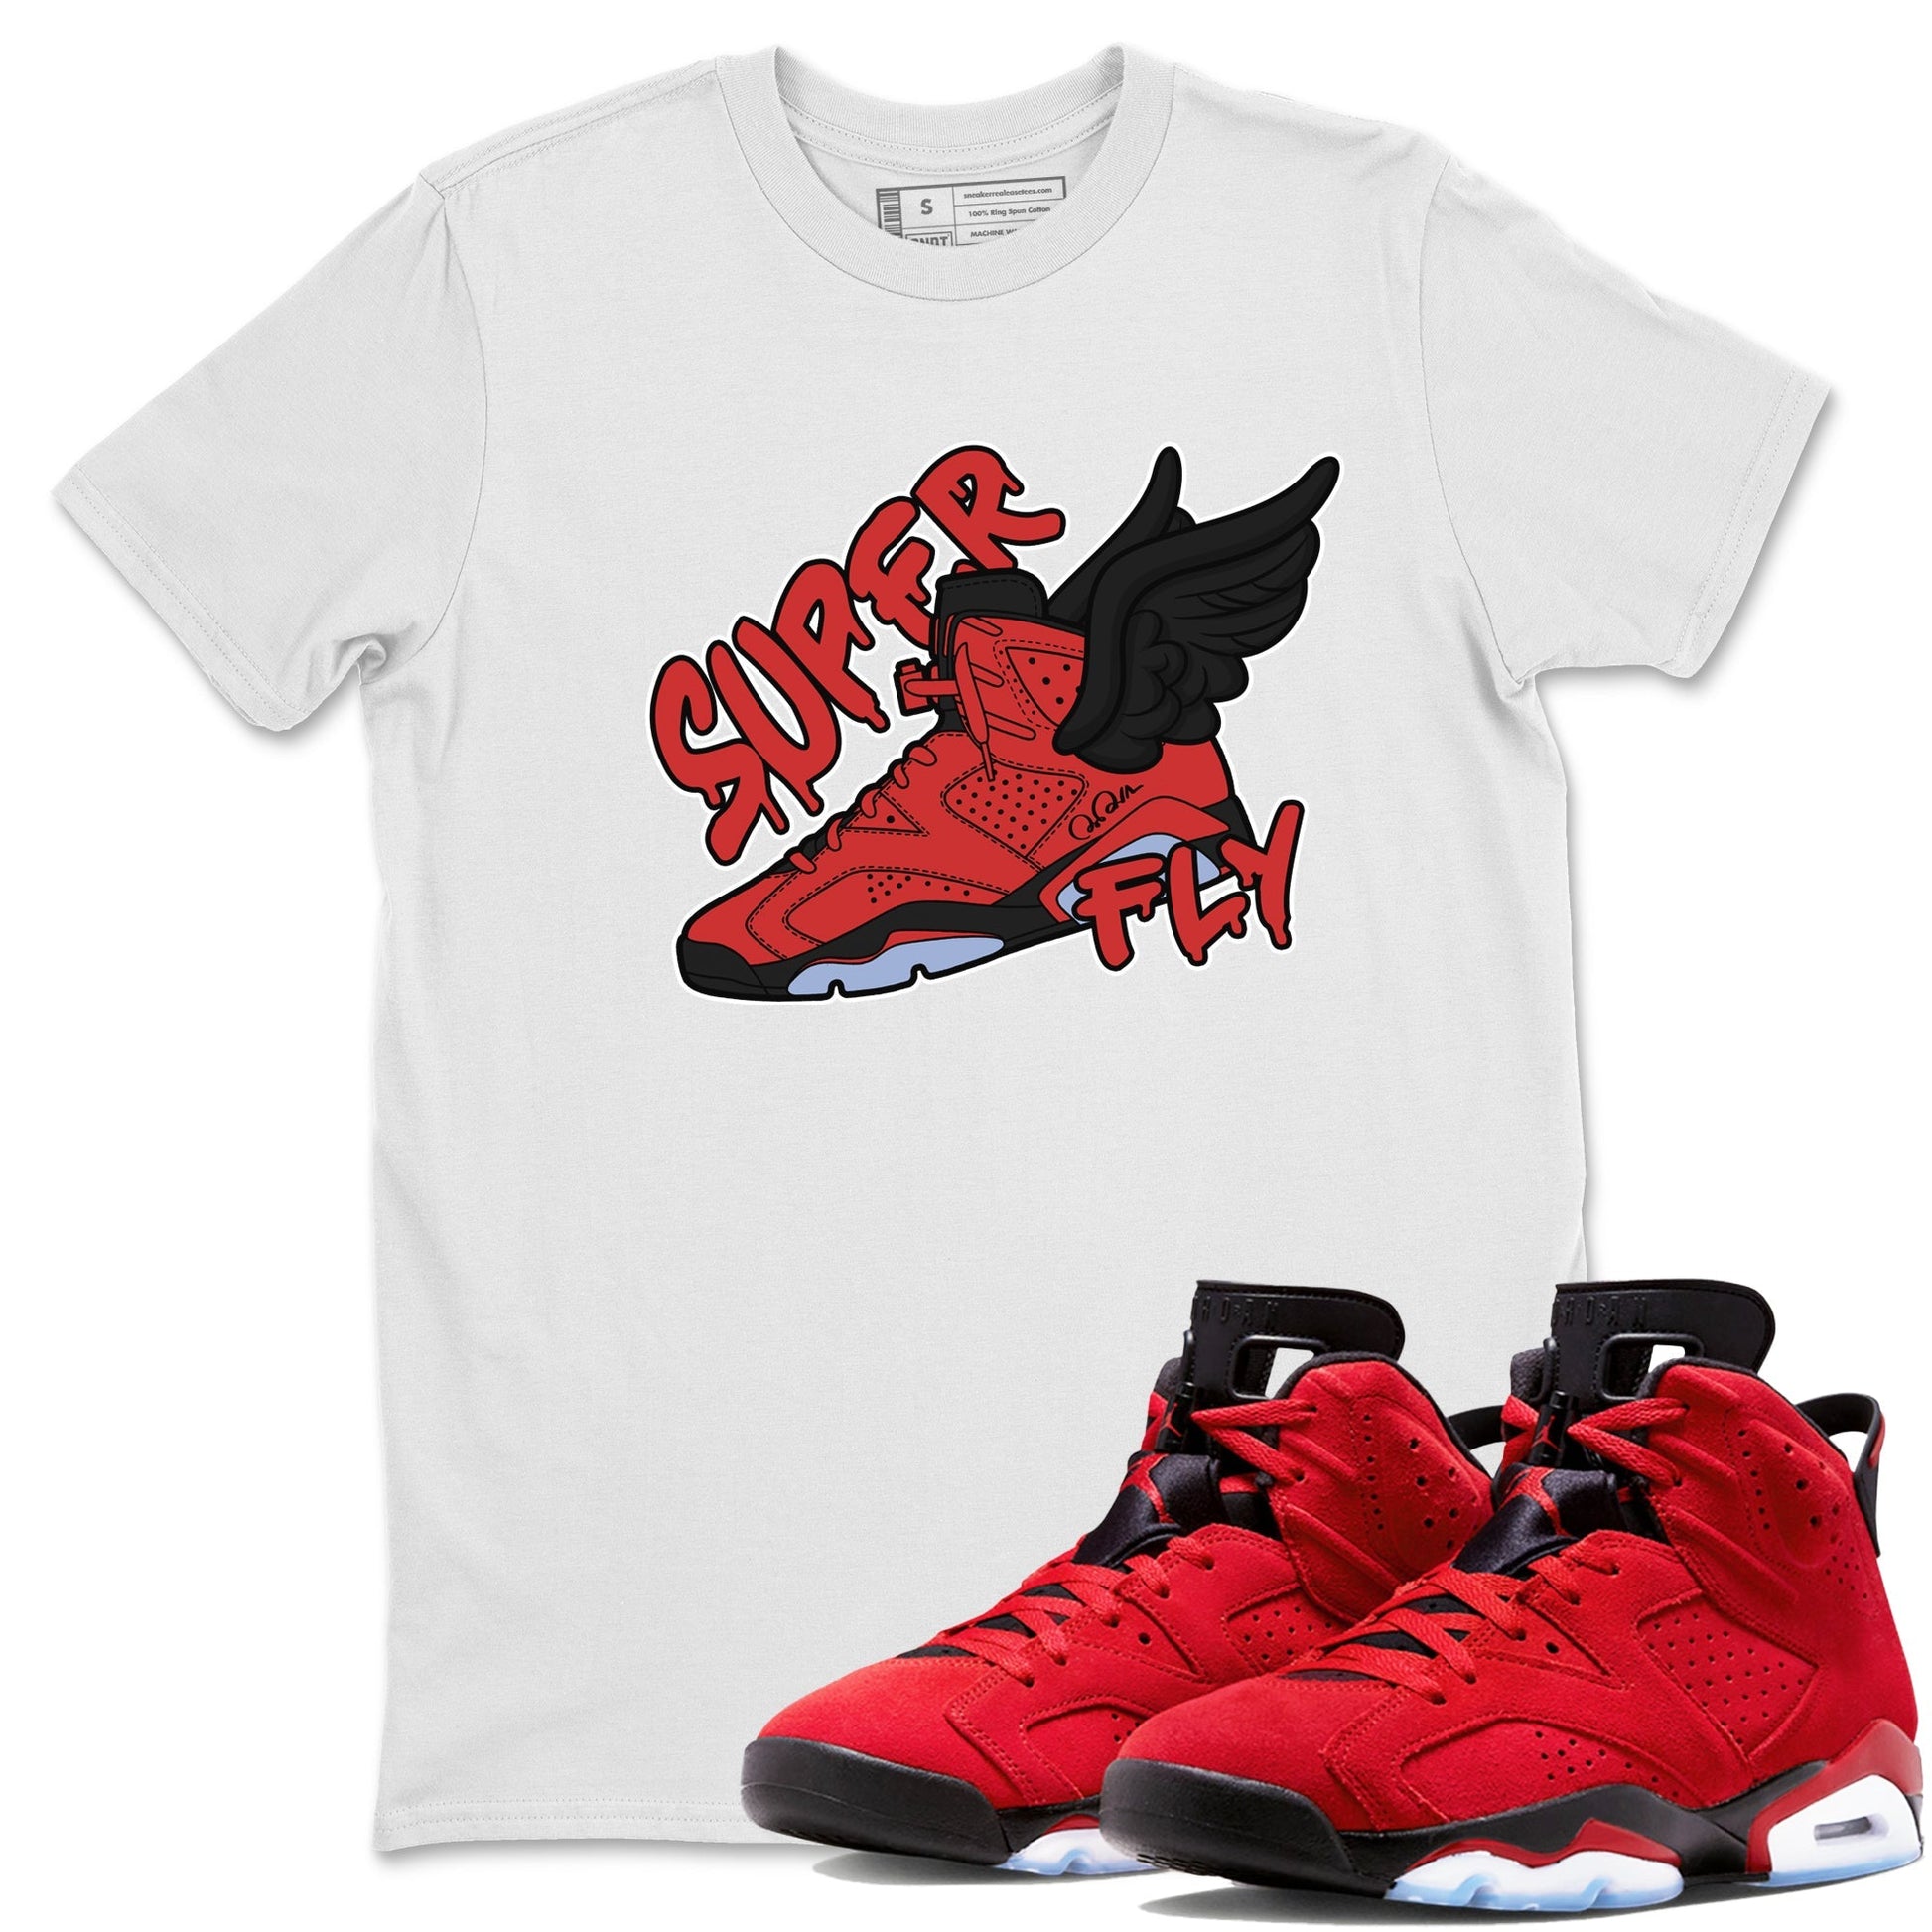 Air Jordan 6 Toro Bravo Sneaker Match Tees Super Fly Sneaker Tees AJ6 Toro Bravo Sneaker Release Tees Unisex Shirts White 1